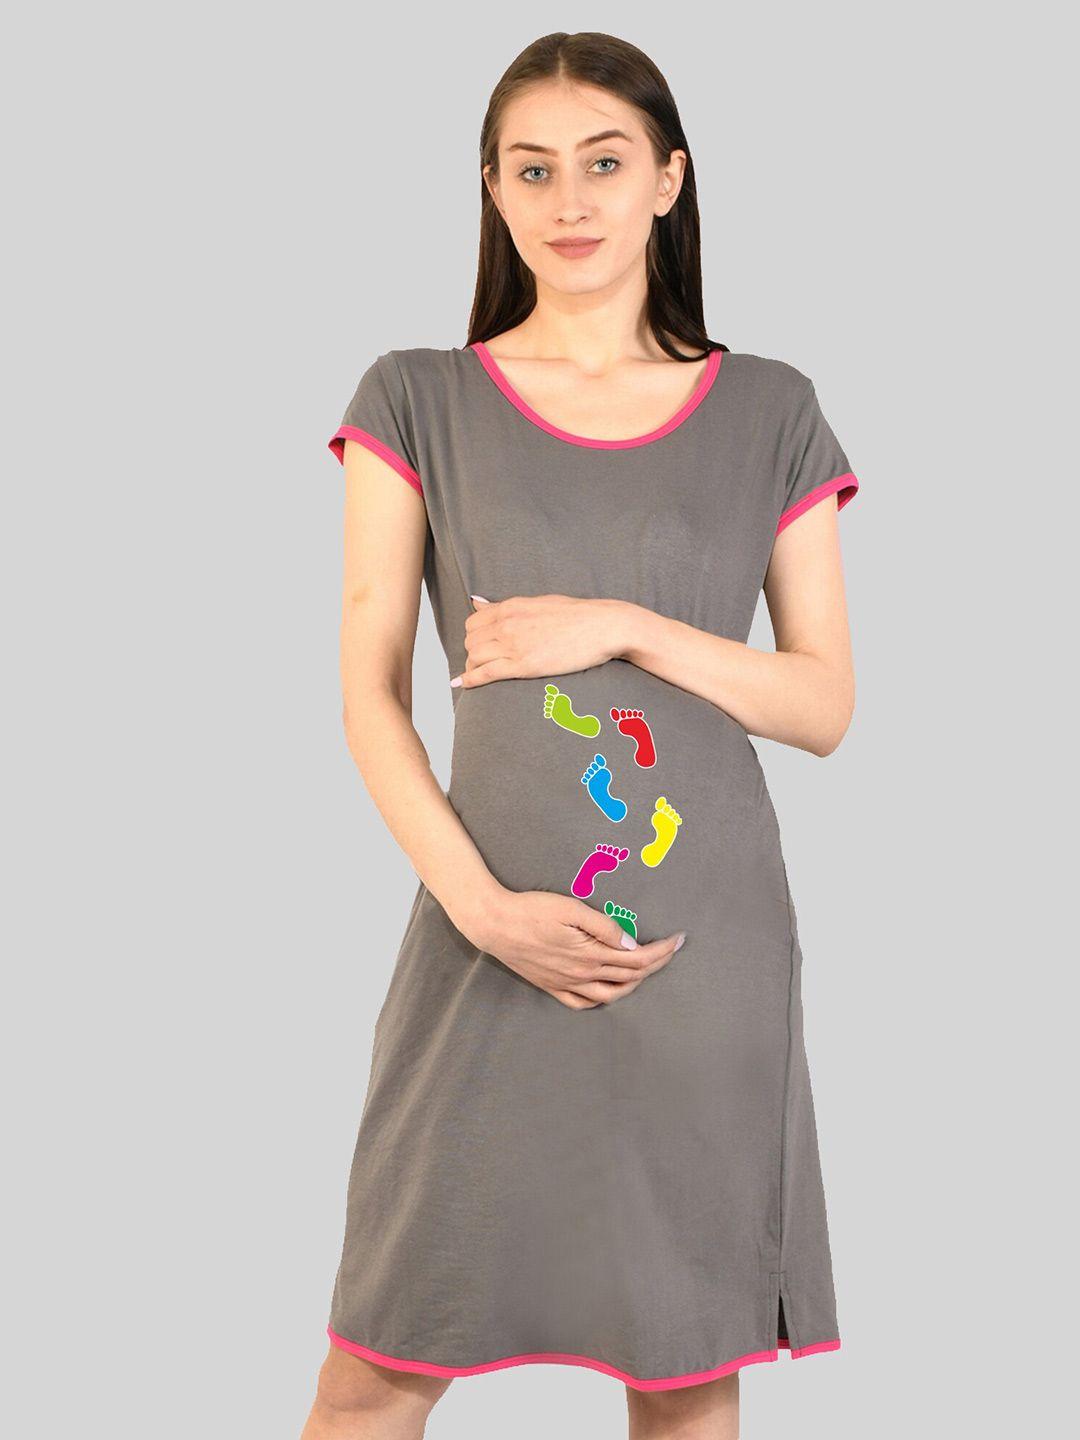 sillyboom-graphic-printed-maternity-t-shirt-nightdress